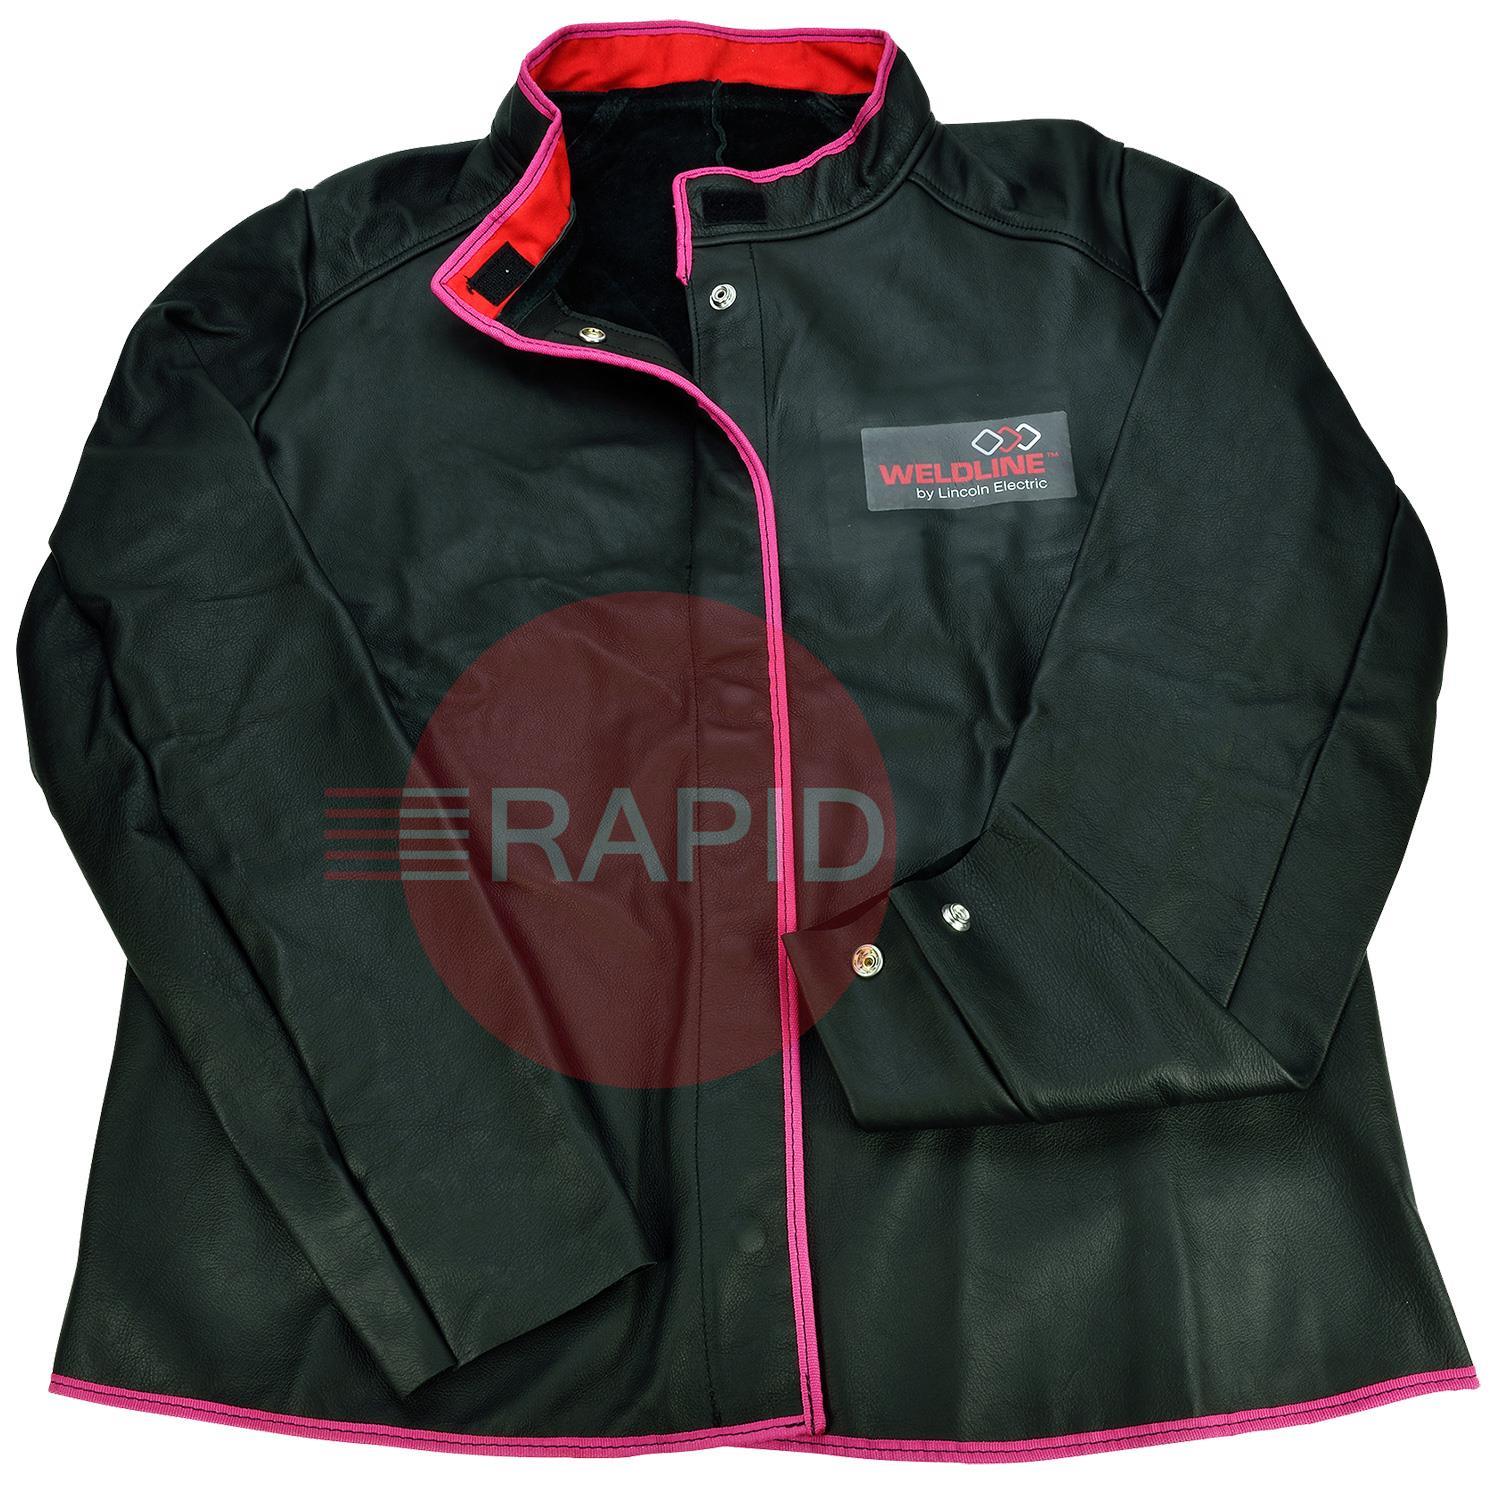 WJL-XX-2019  Weldline Female Grain Leather Welding Jacket with Carry Bag, Sizes Small - X-Large, EU 425/2016